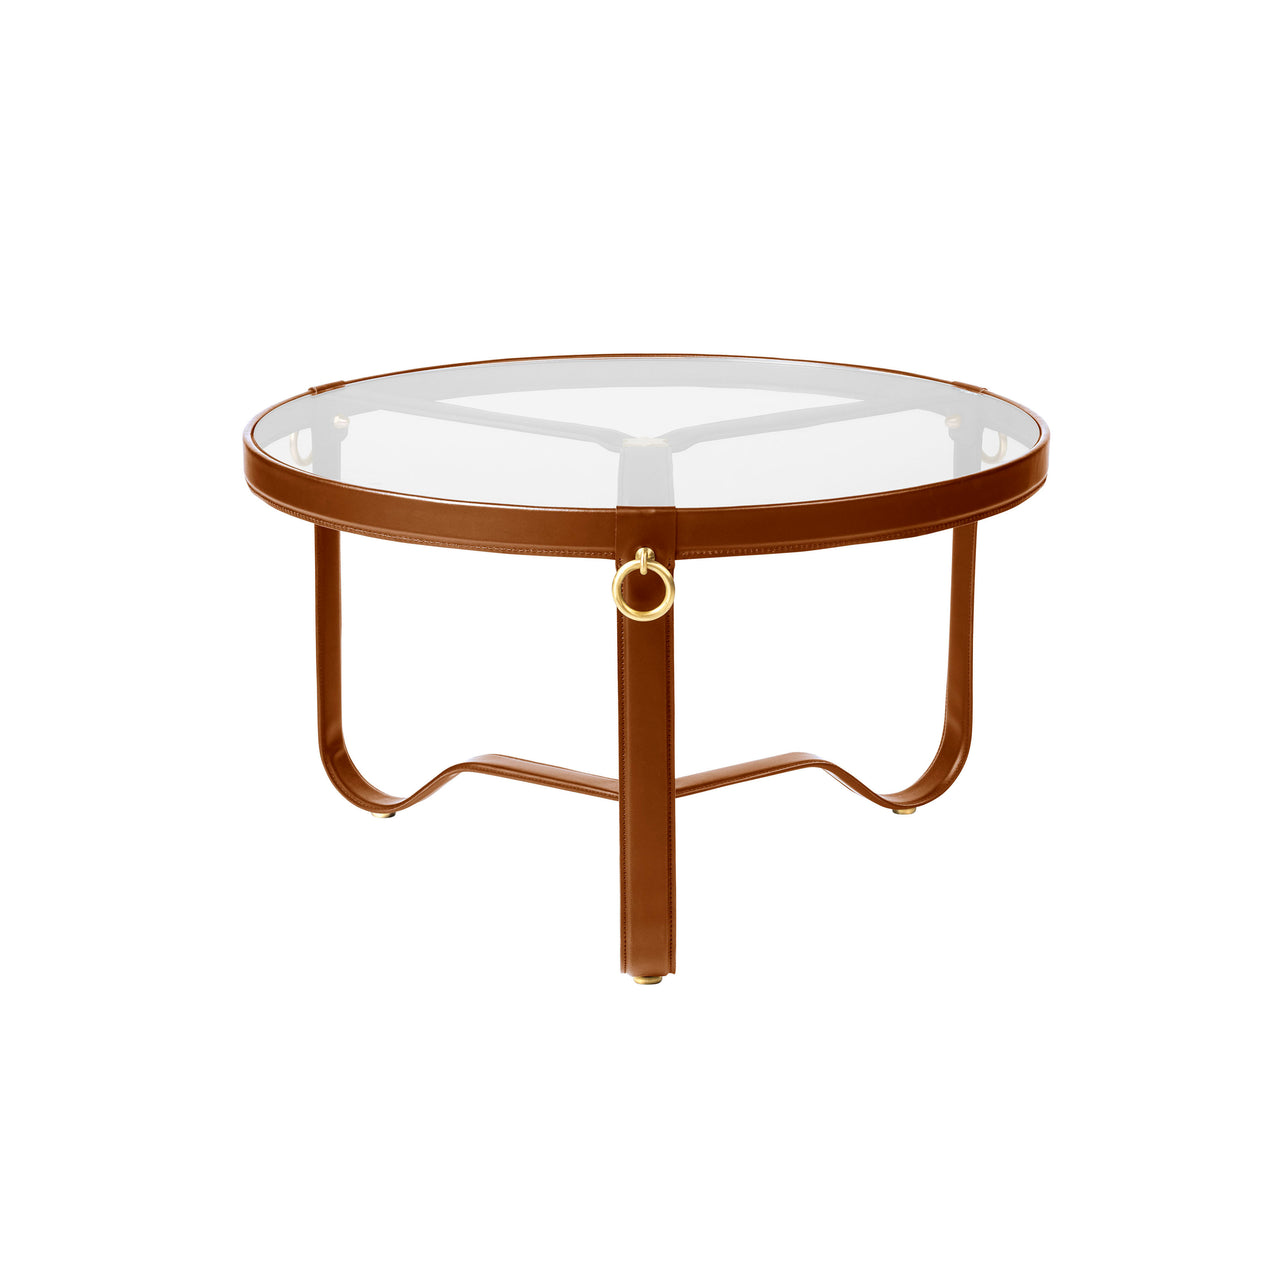 Adnet Circular Coffee Table: Small - 27.6